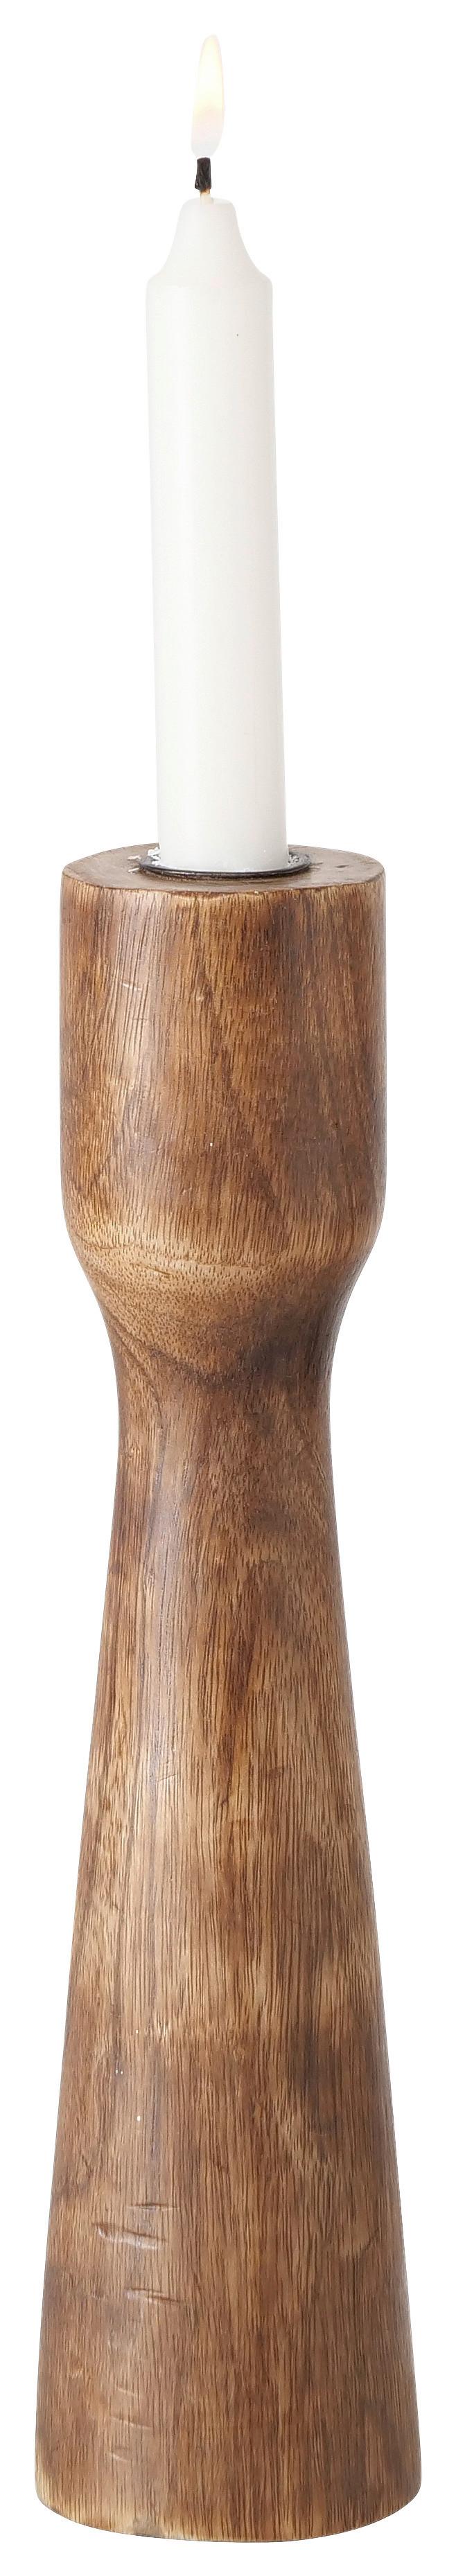 Kerzenhalter Caldeas aus Mangoholz - Naturfarben, MODERN, Holz (30cm) - Premium Living